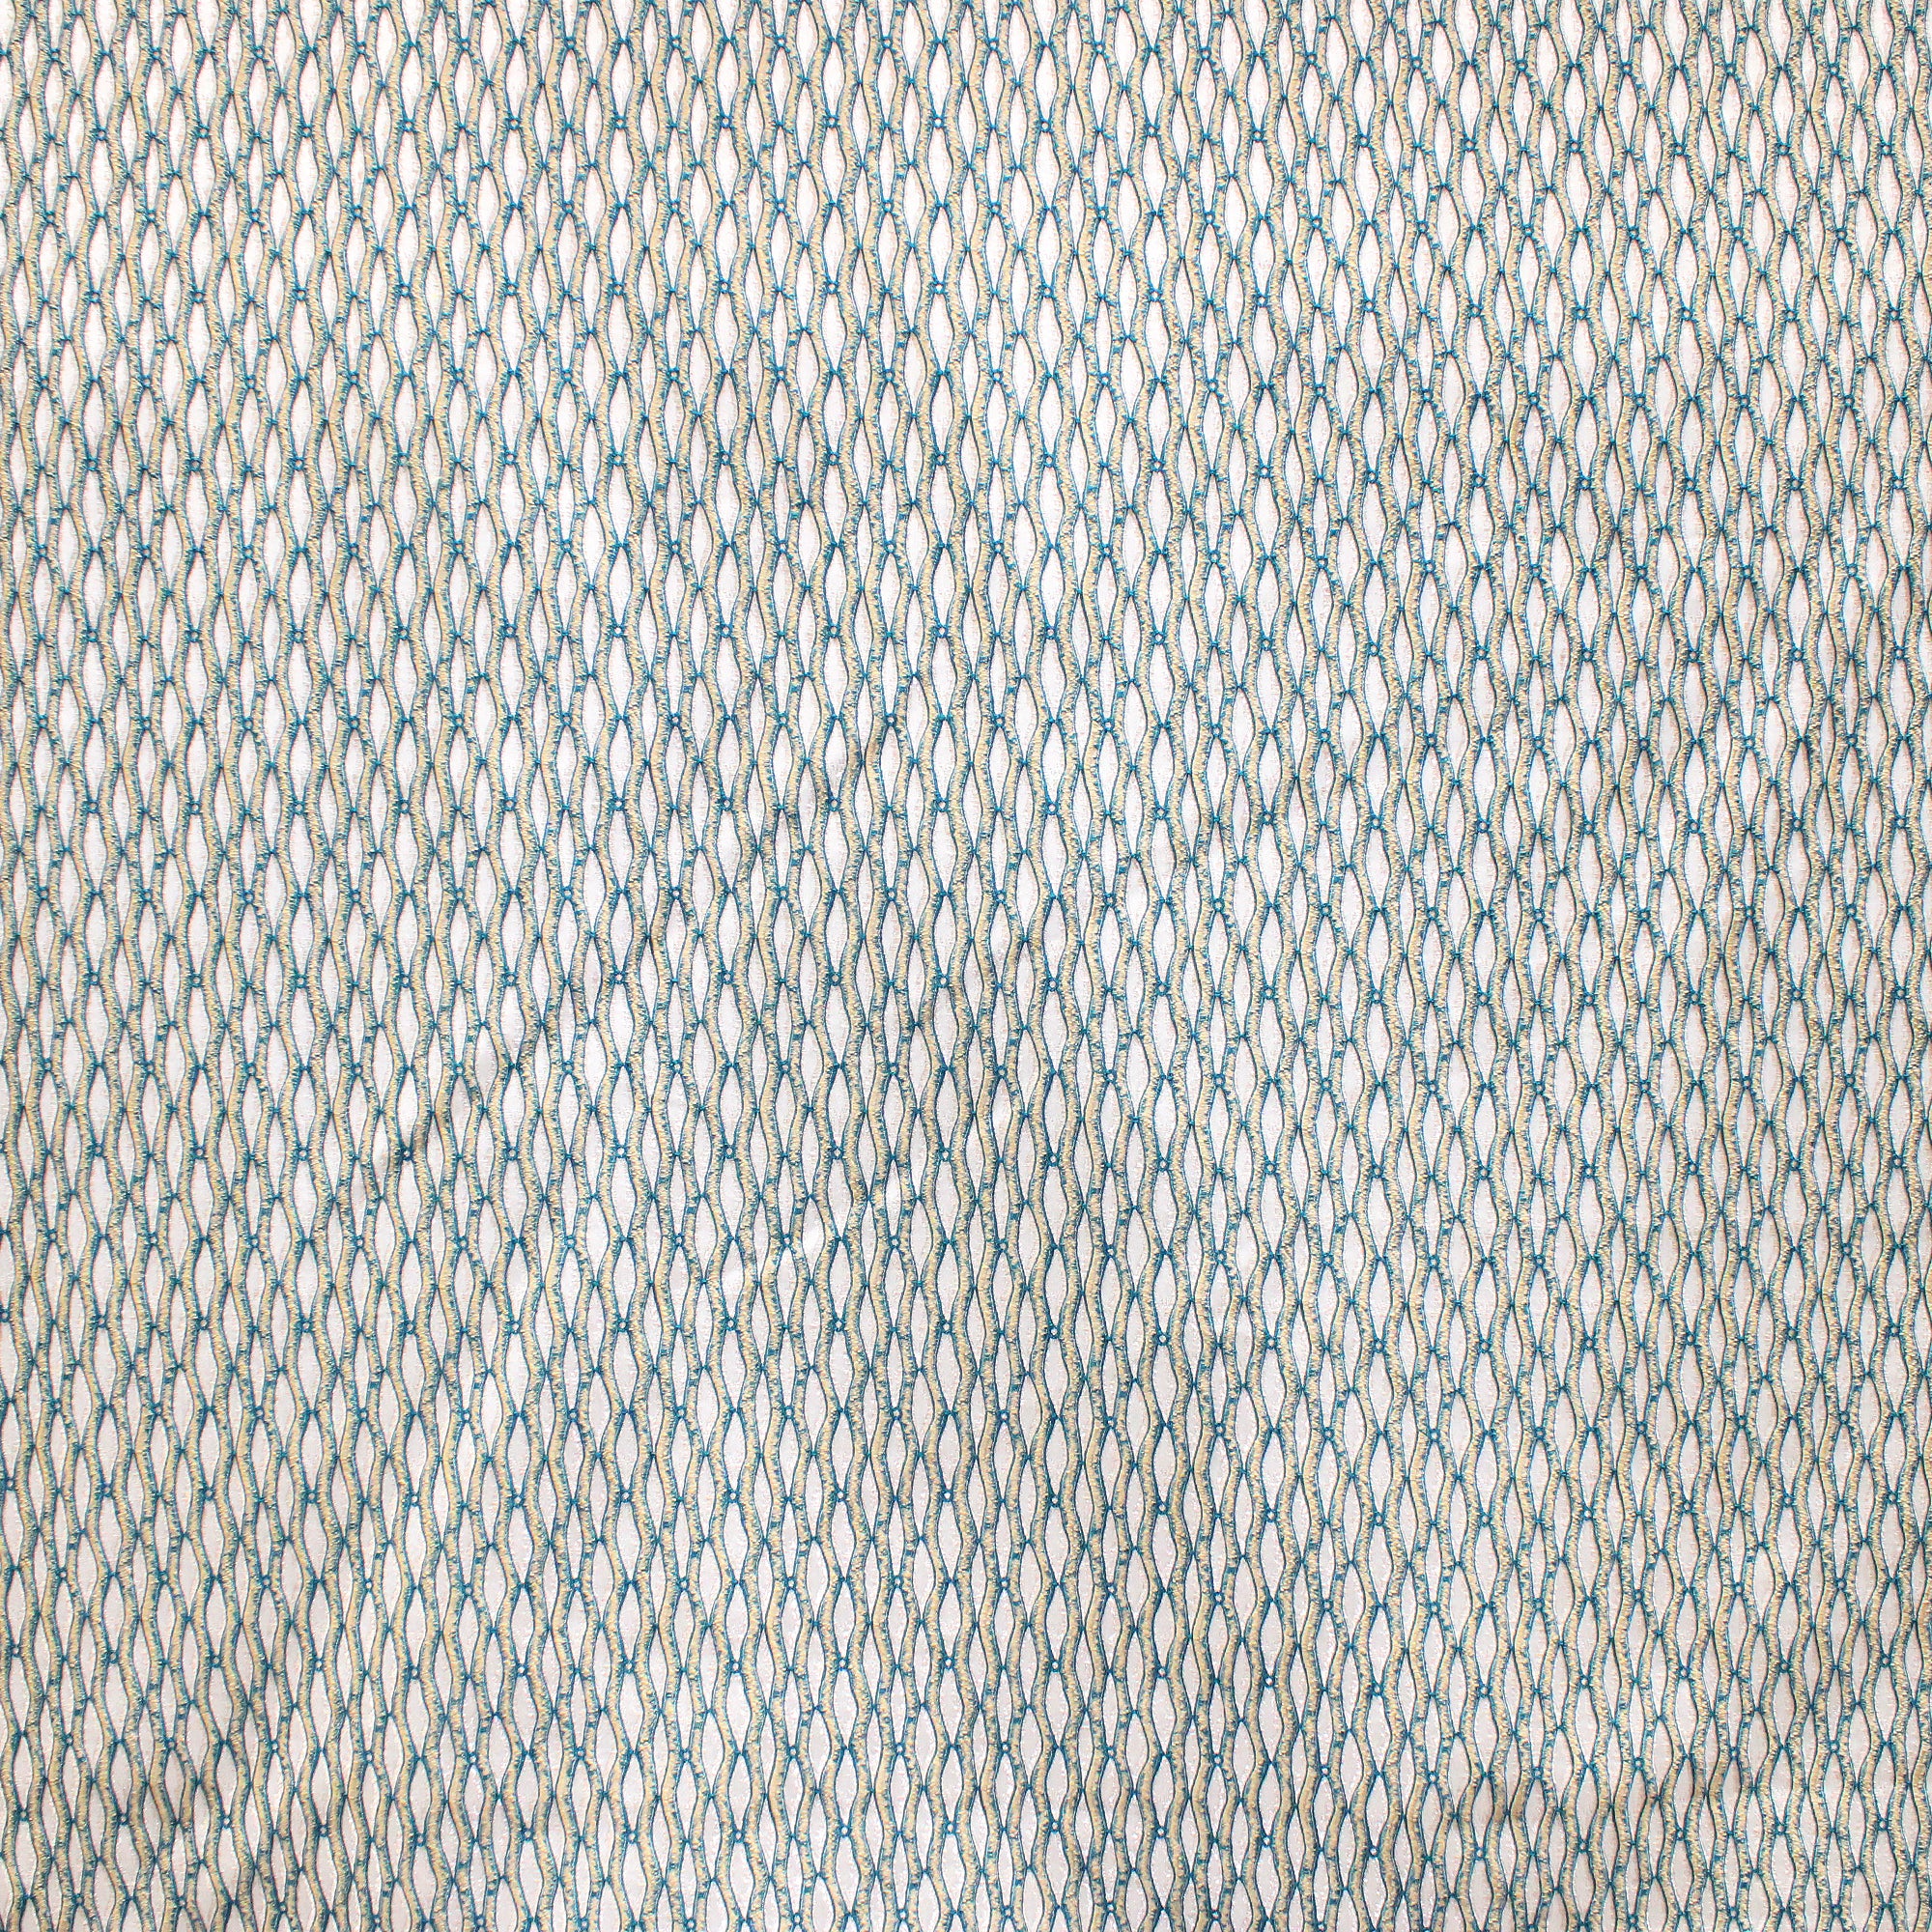 Peyton Fabric | Wavy Striped Textured Jacquard